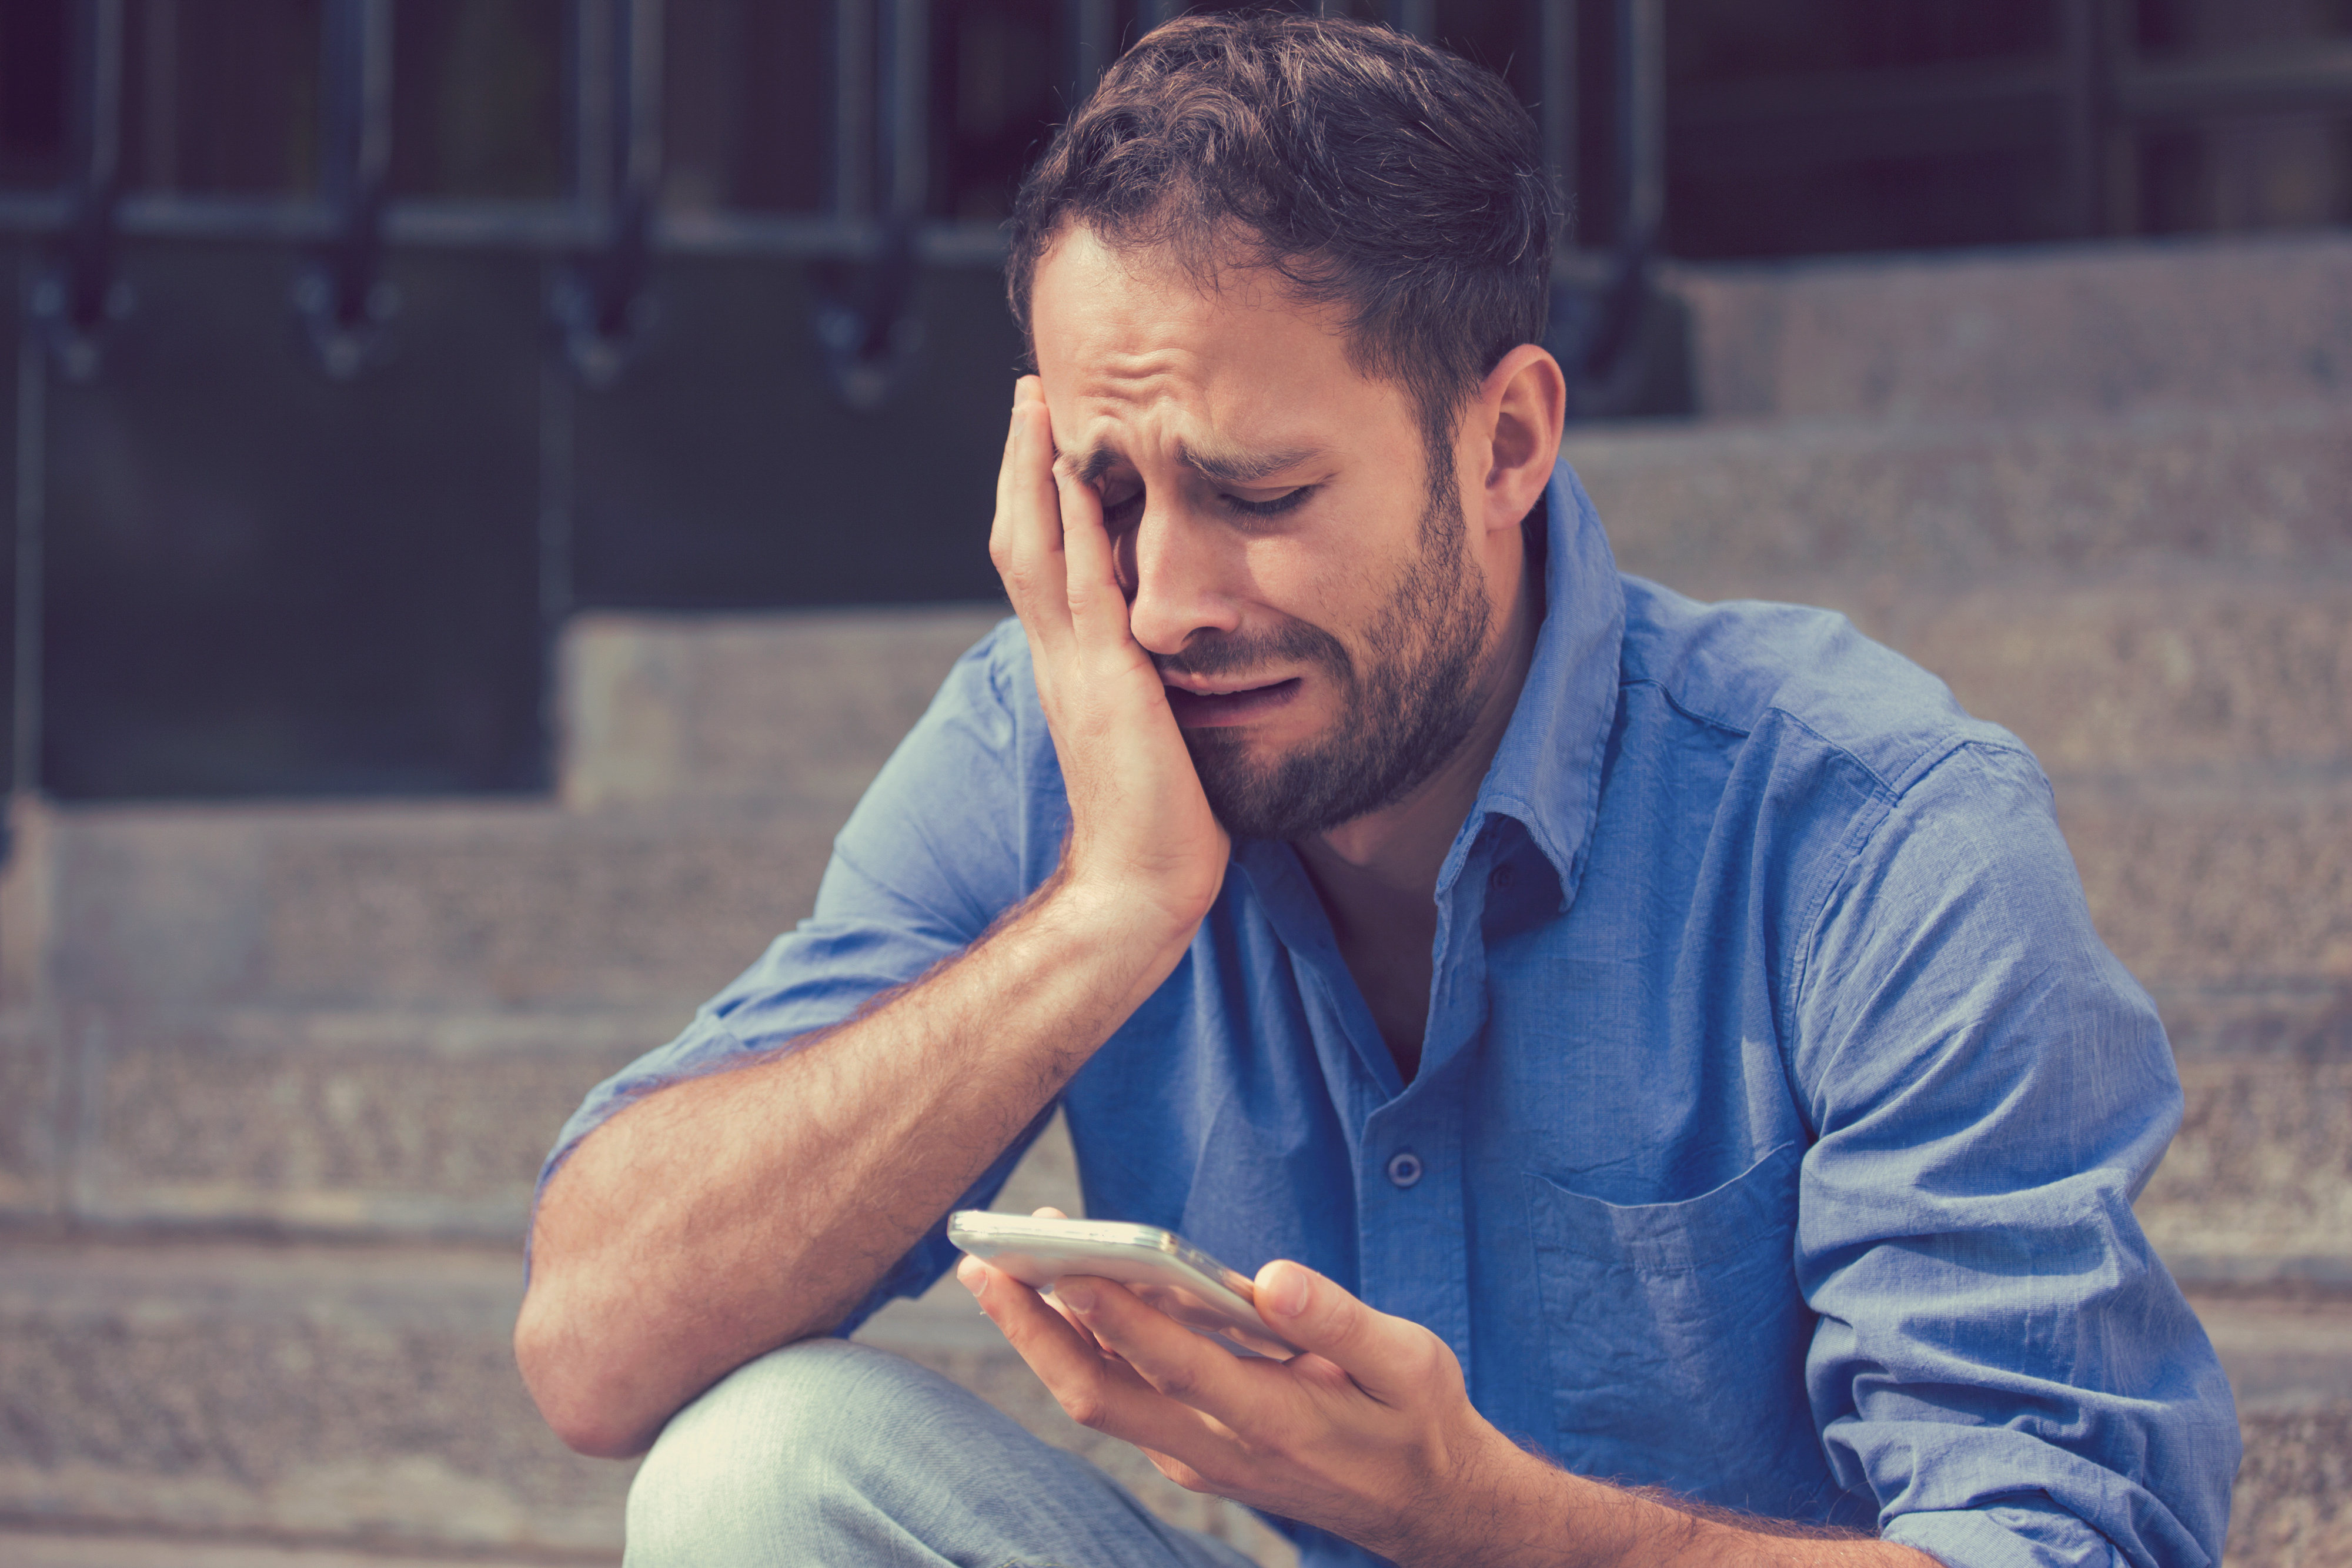 Homme en pleurs regardant son téléphone | Source : Shutterstock